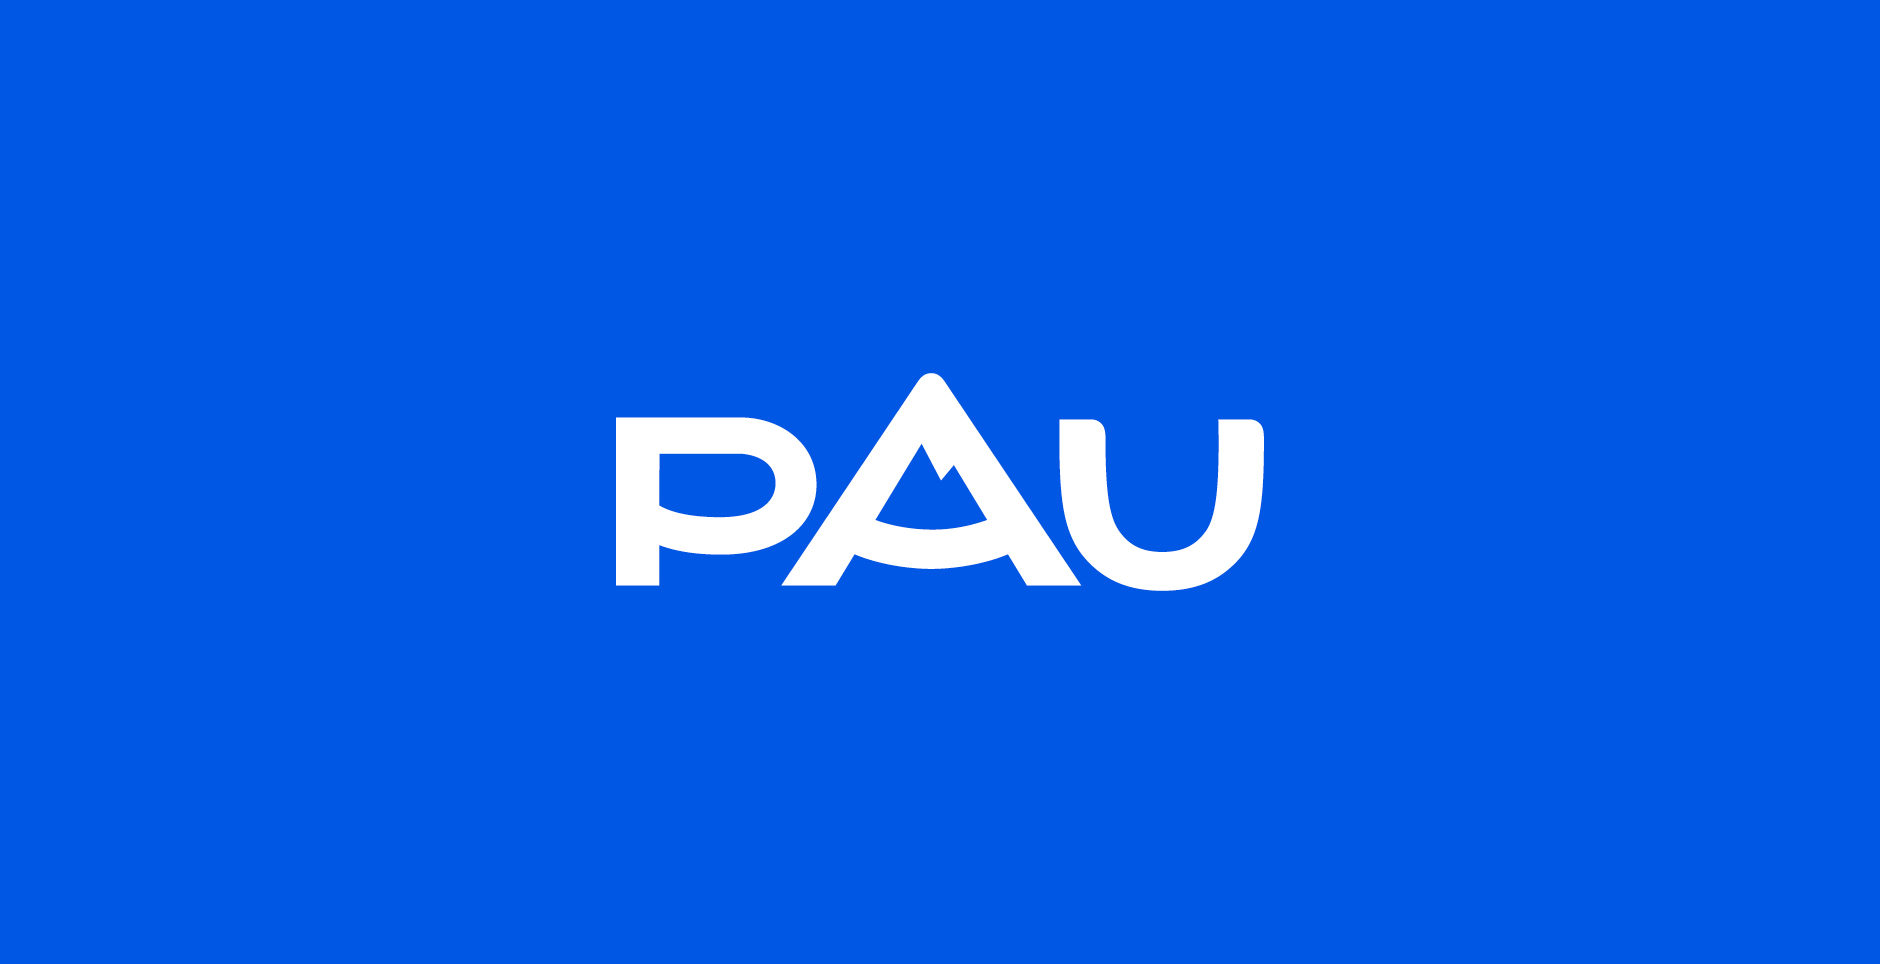 Case_study_Pau2